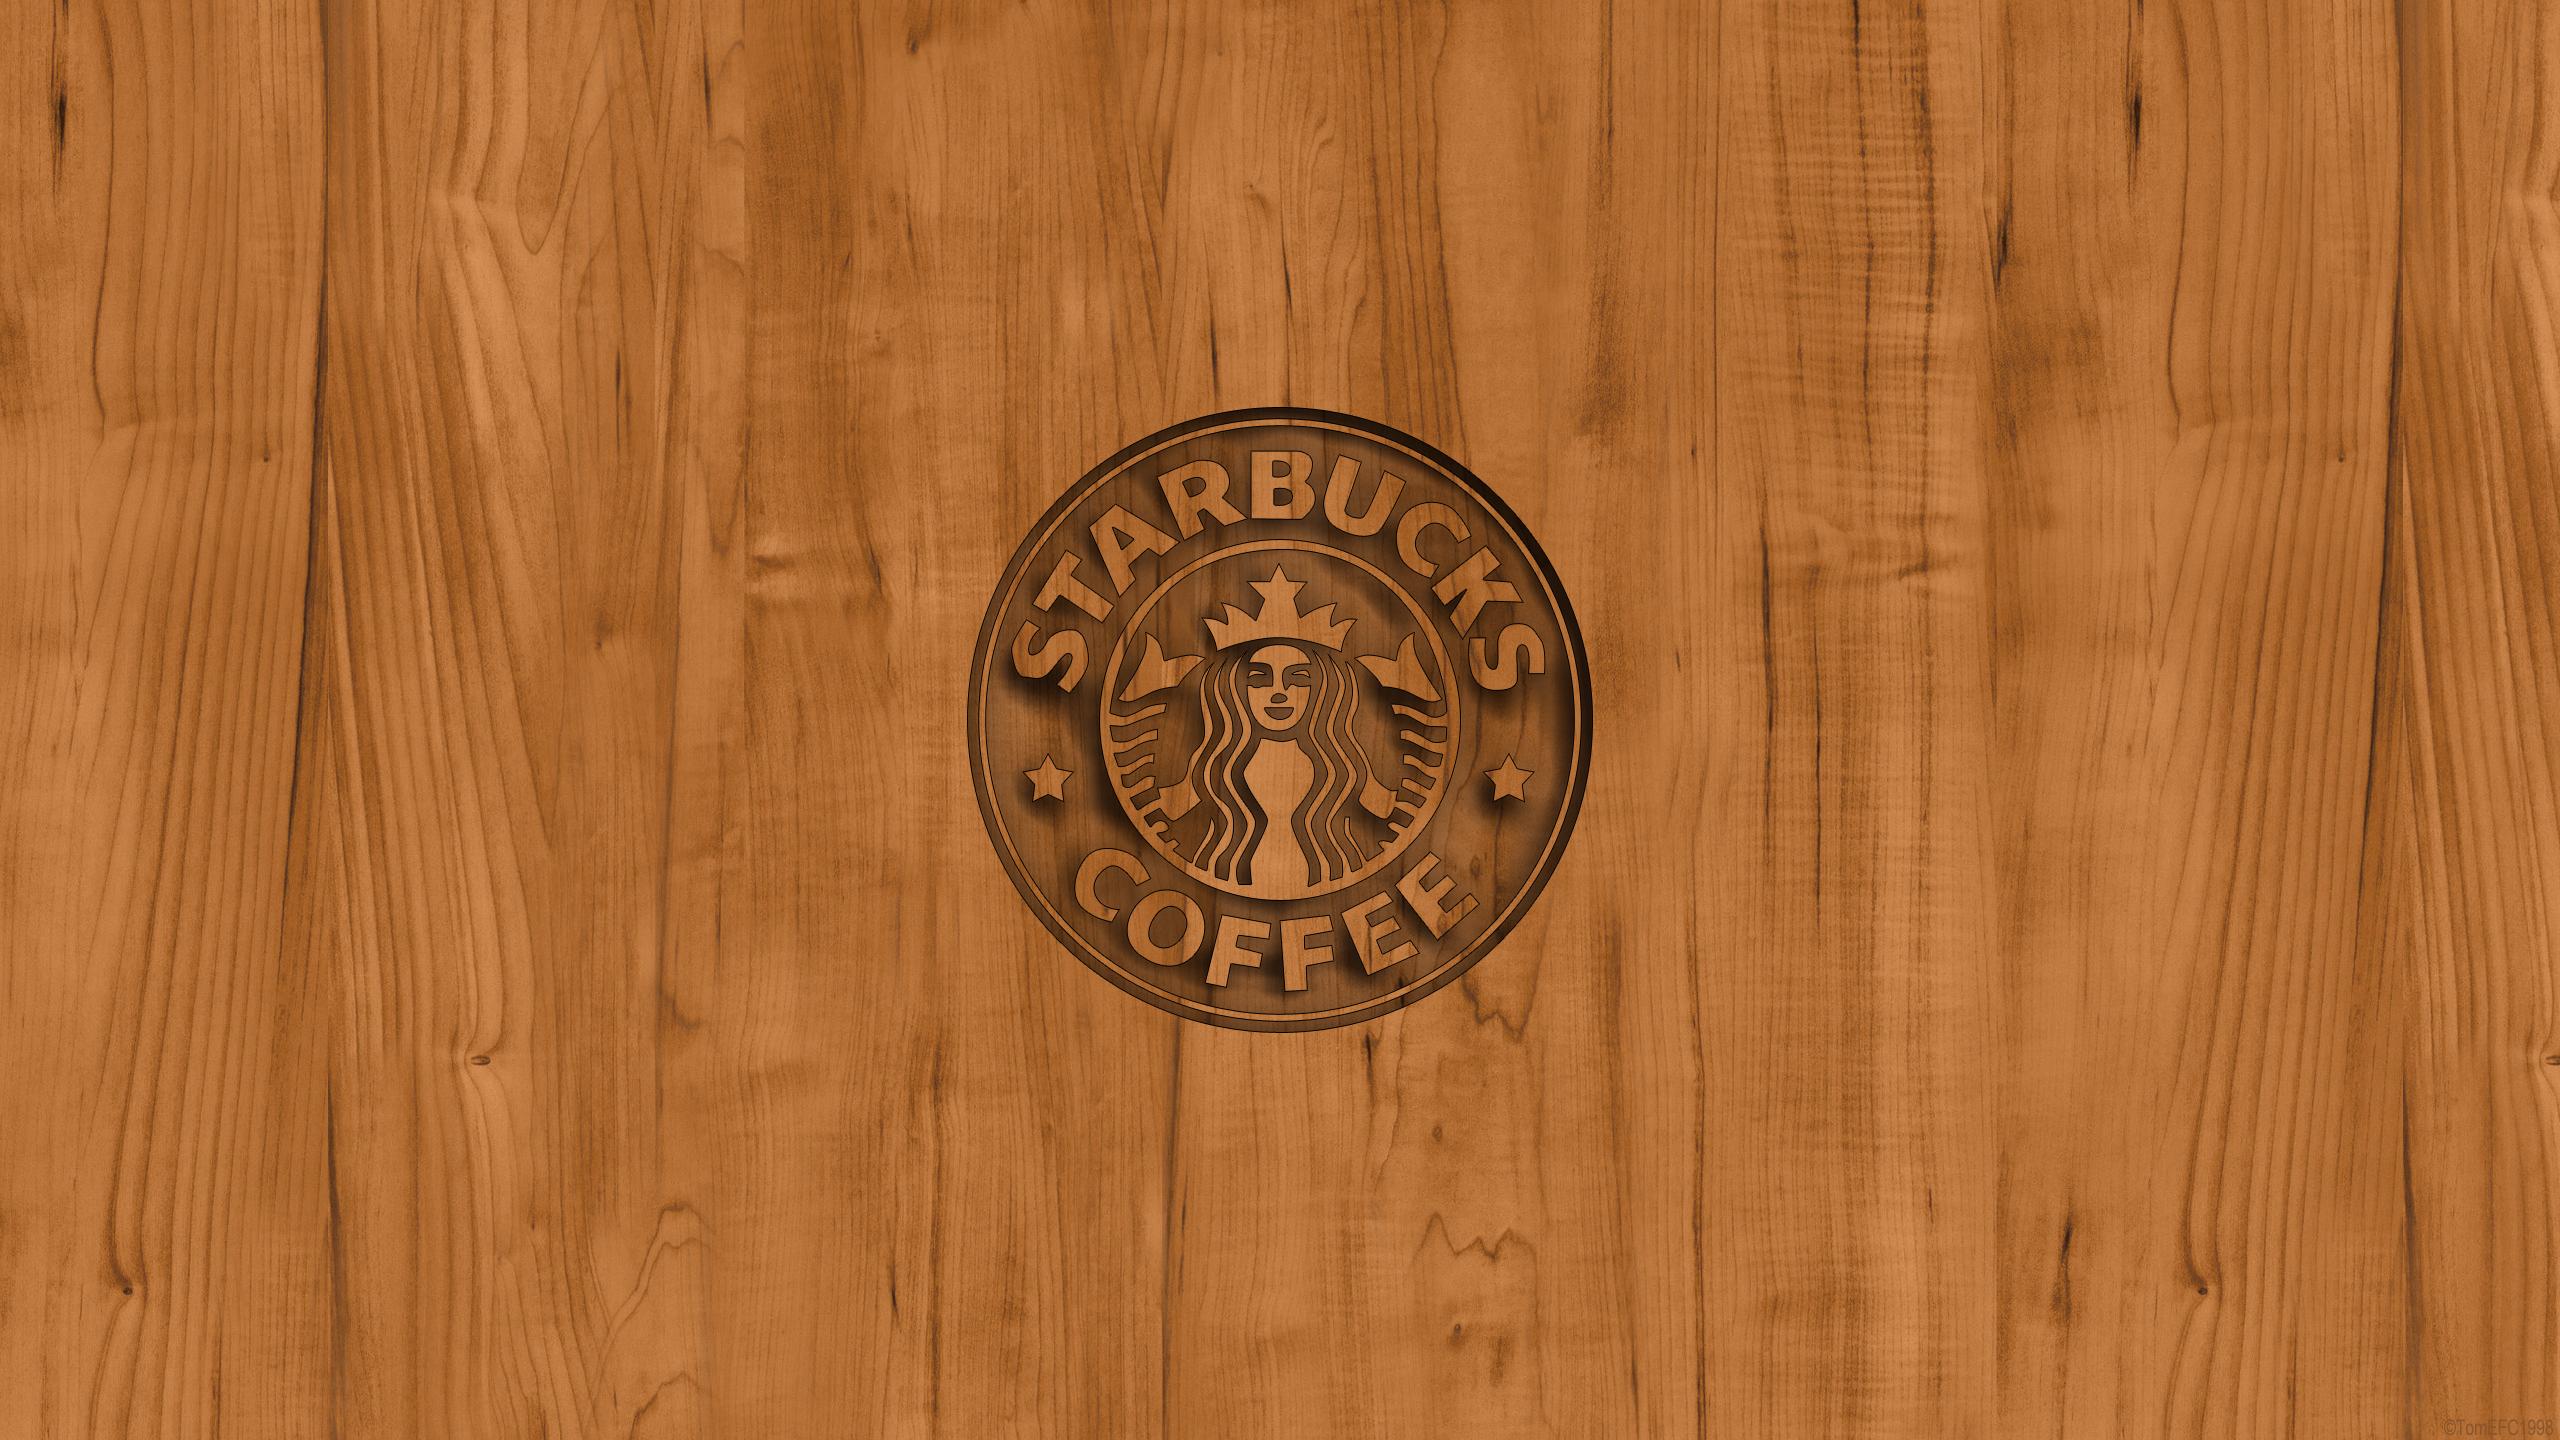 Cute Starbucks Backgrounds Hd 2020 Live Wallpaper Hd